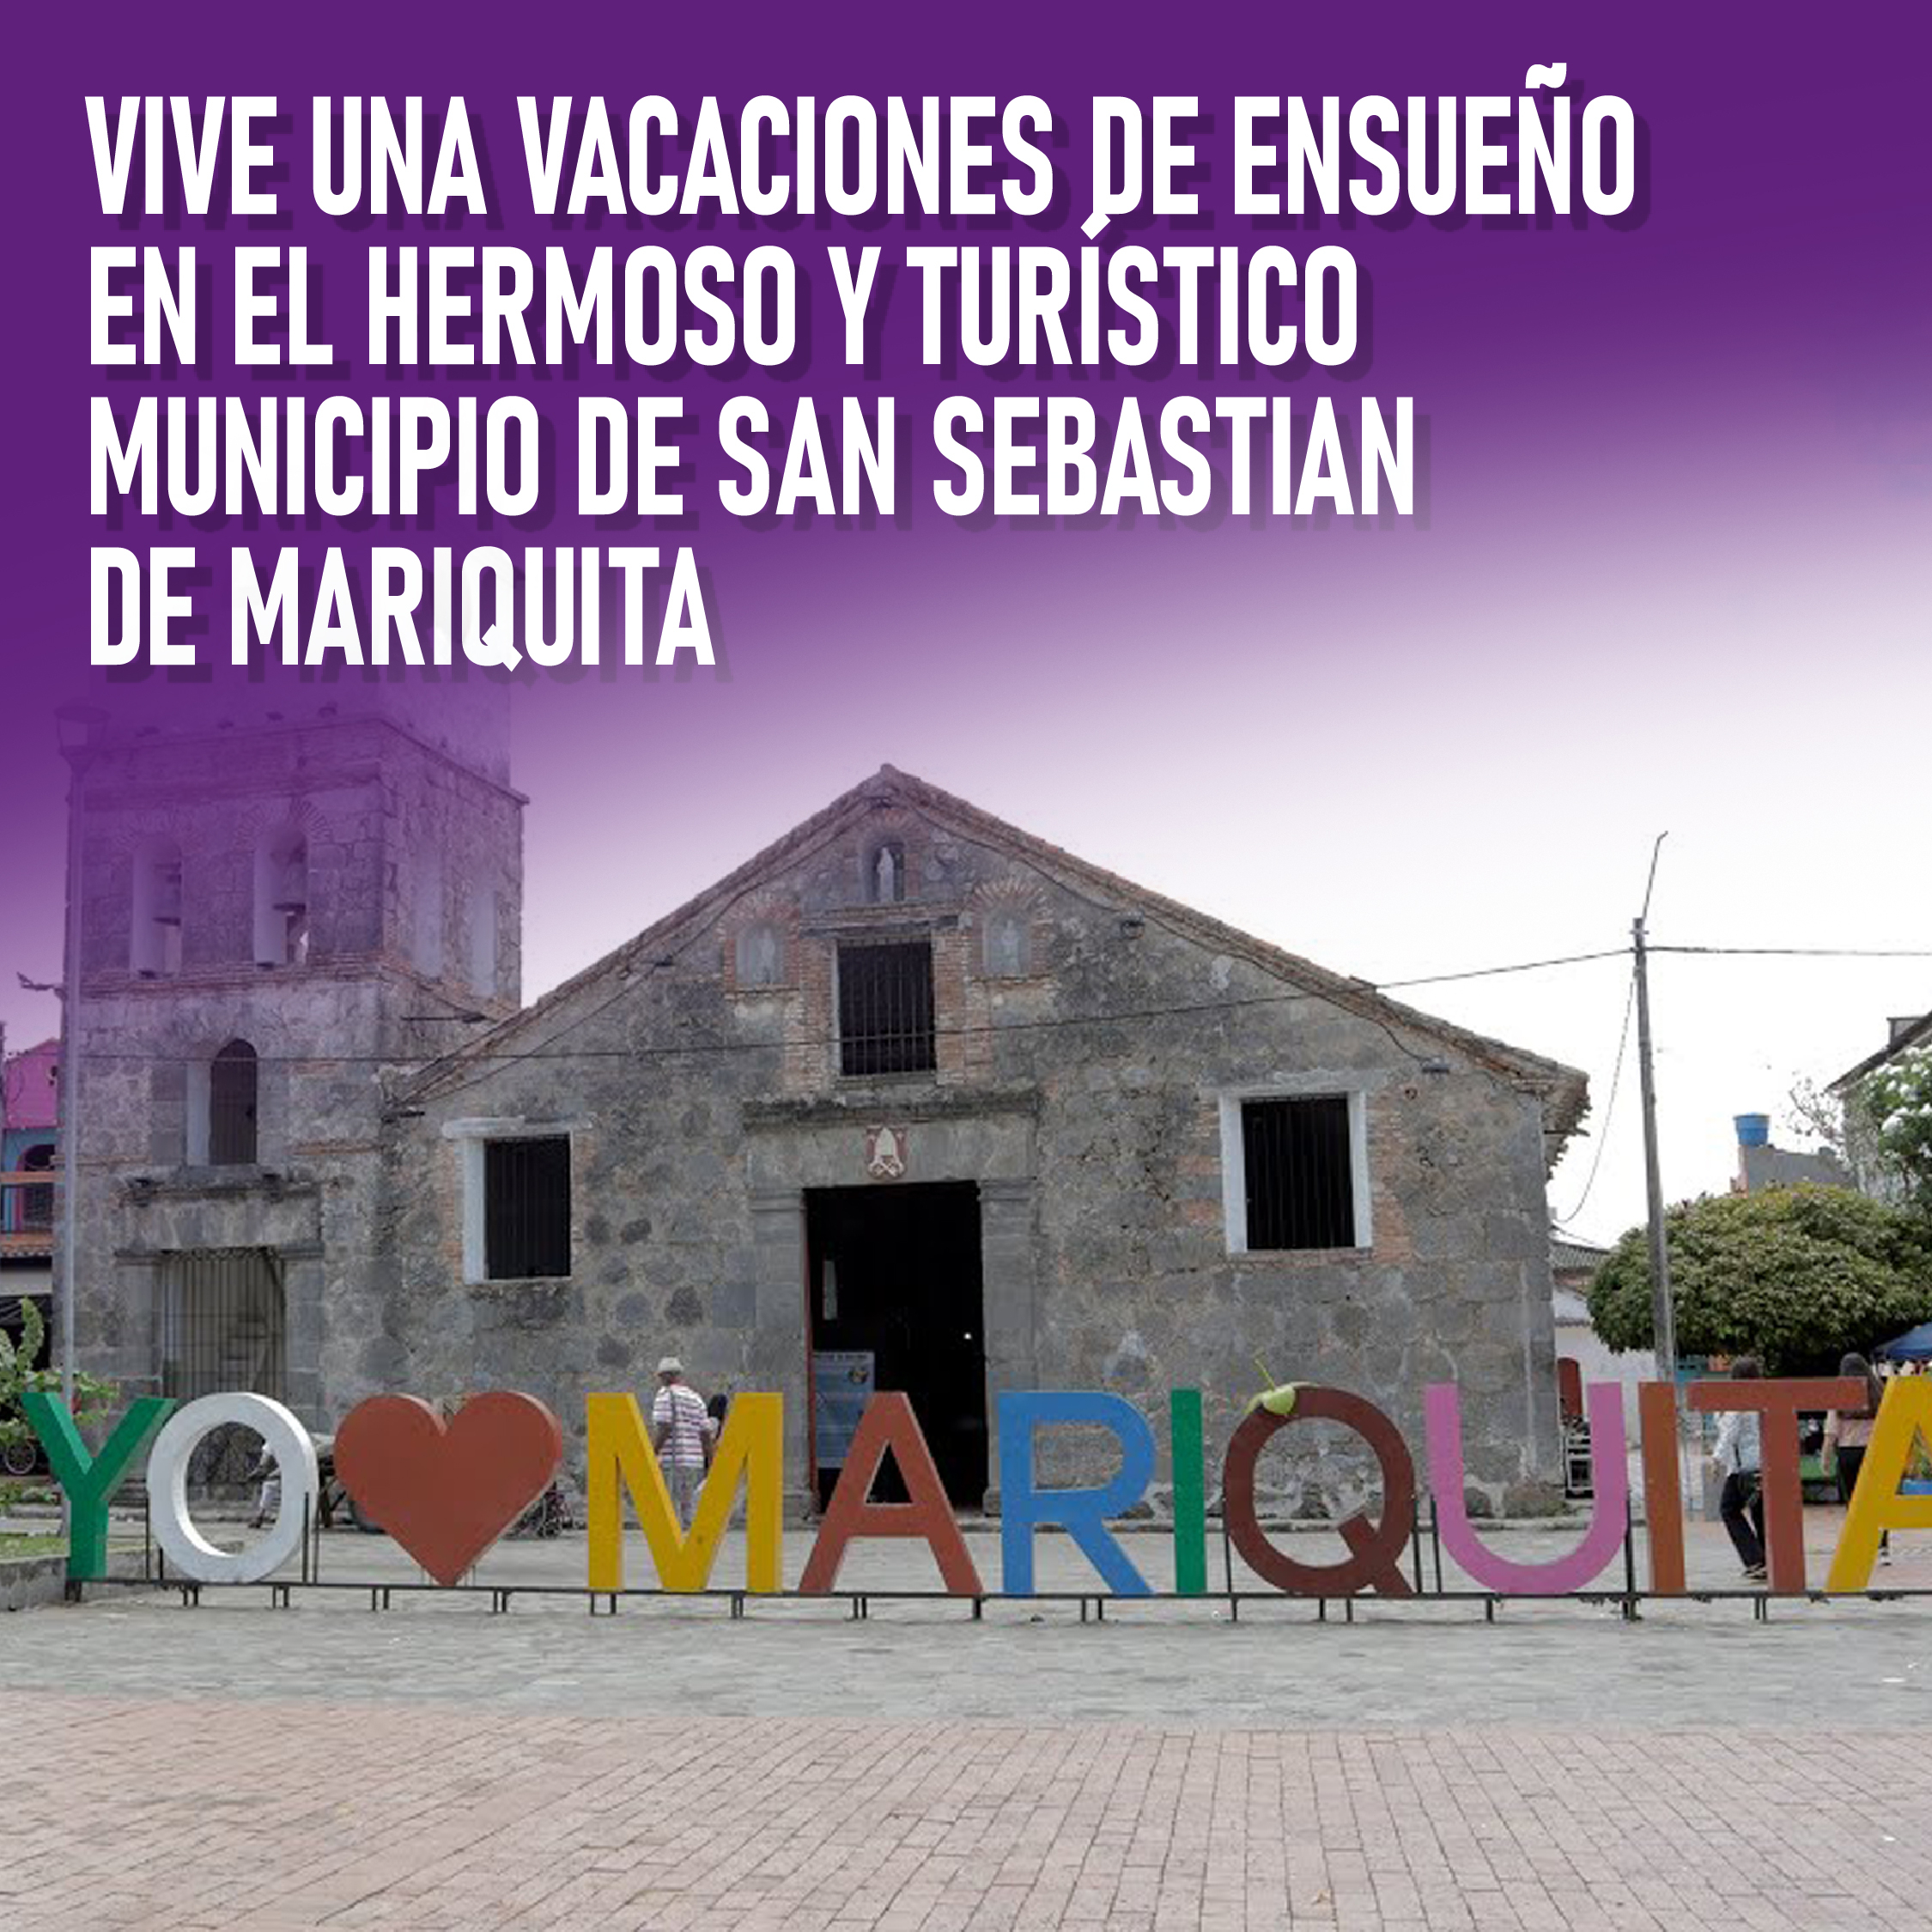 Alquiler de Carros en Ibagué – Visita San Sebastian de Mariquita